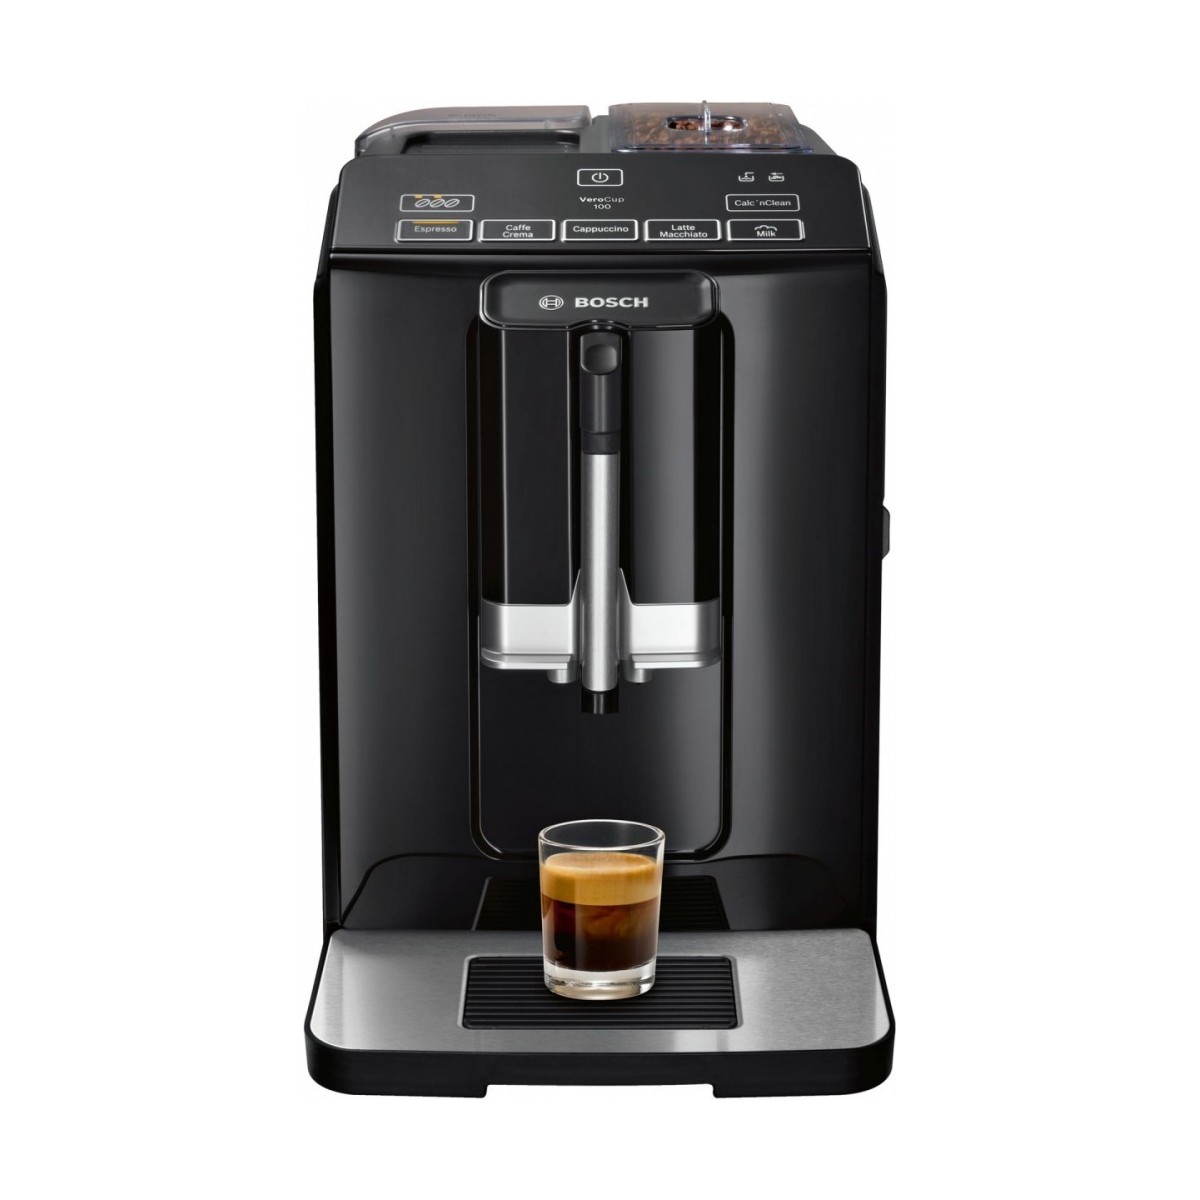 Bosch TIS30129RW - Espresso machine - 1.4 L - Coffee beans - Ground coffee - 1300 W - Black